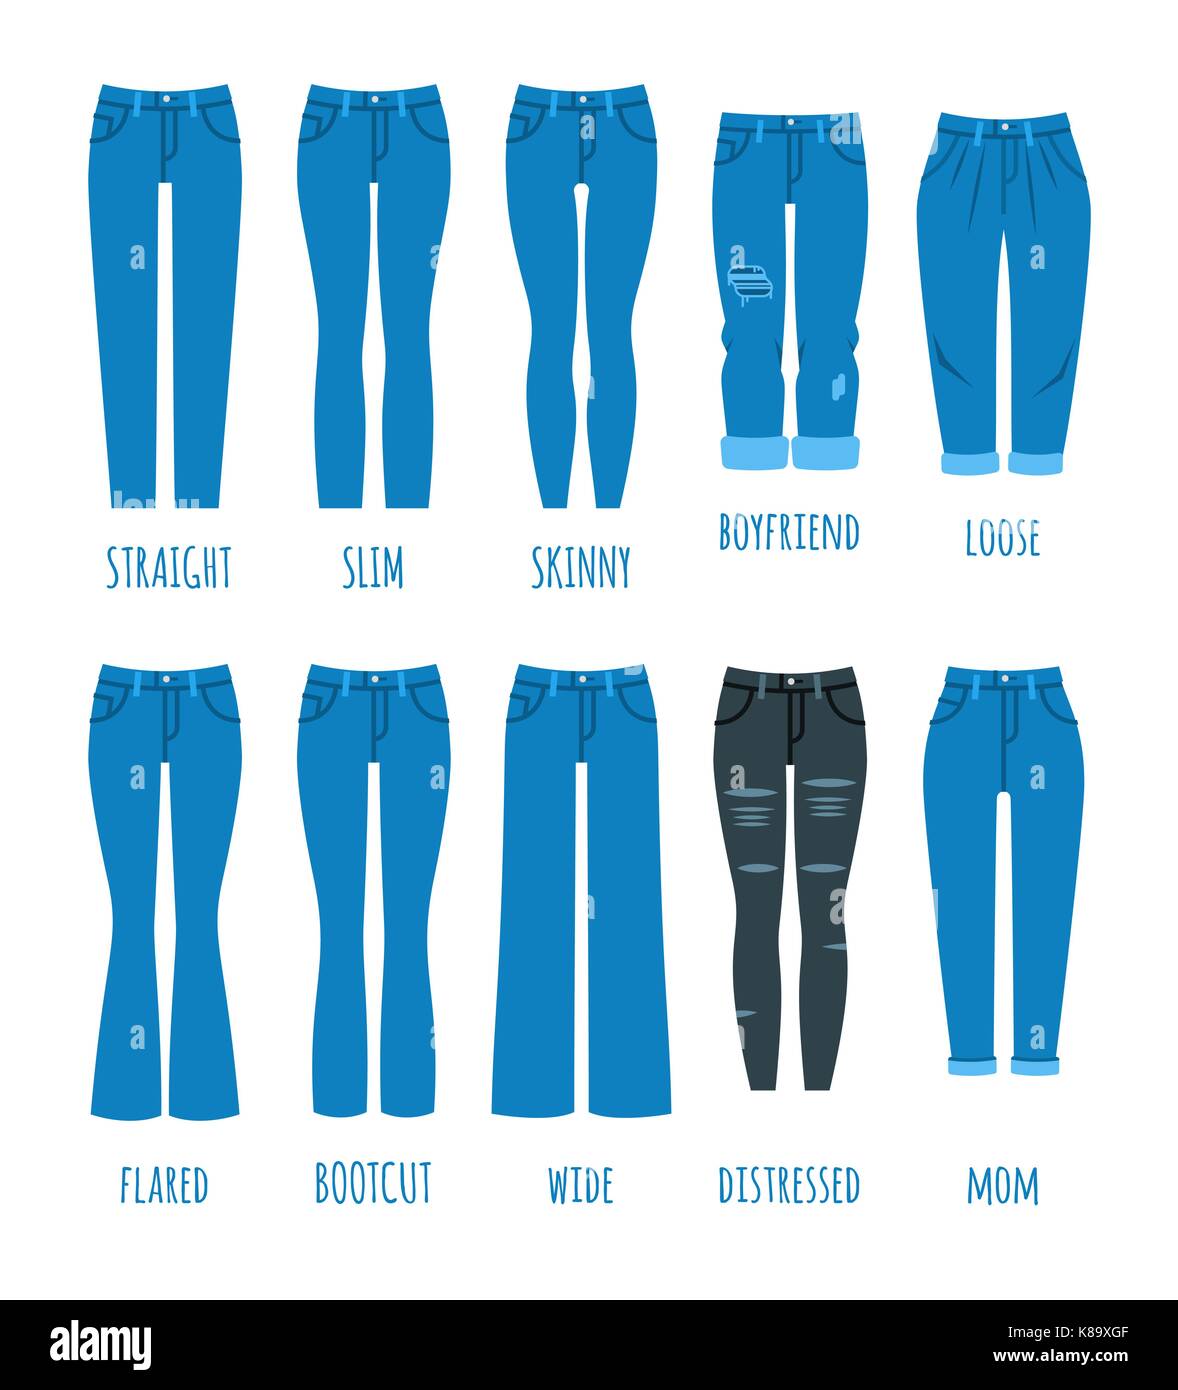 Las mujeres jeans colección Styles. denim moda femenina moda pantalones.  Los modelos de pantalón de algodón para chica moderna. plano vector iconos.  guía de ropa infogra Imagen Vector de stock - Alamy